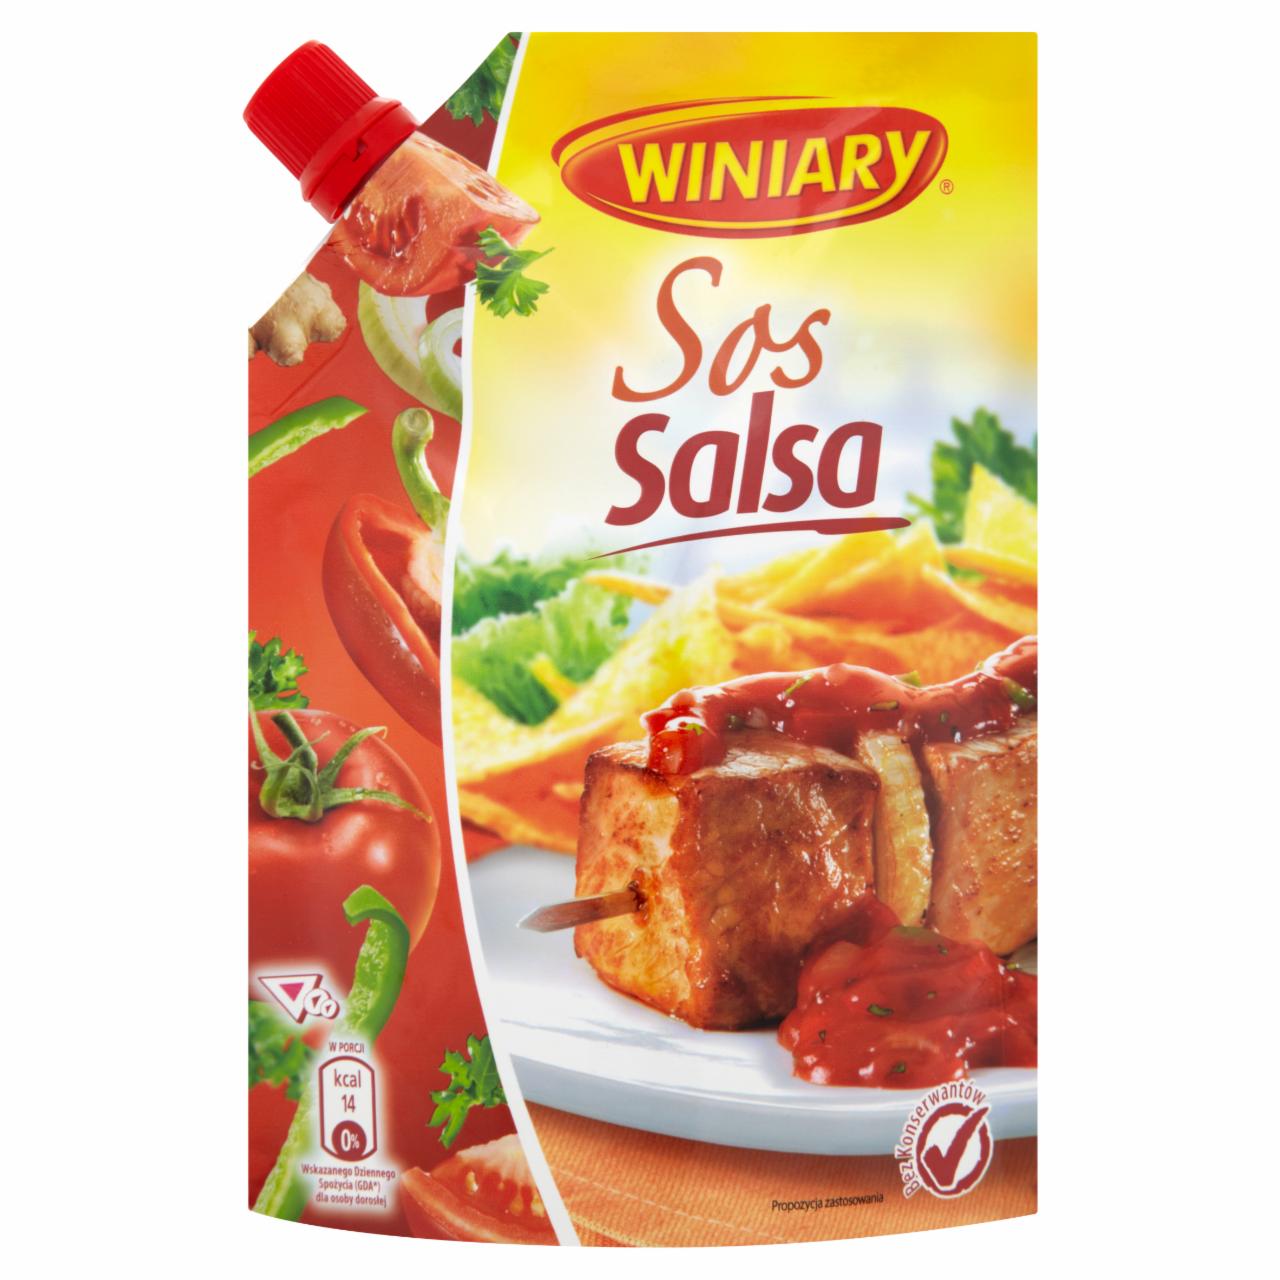 Zdjęcia - Winiary Sos salsa 250 g